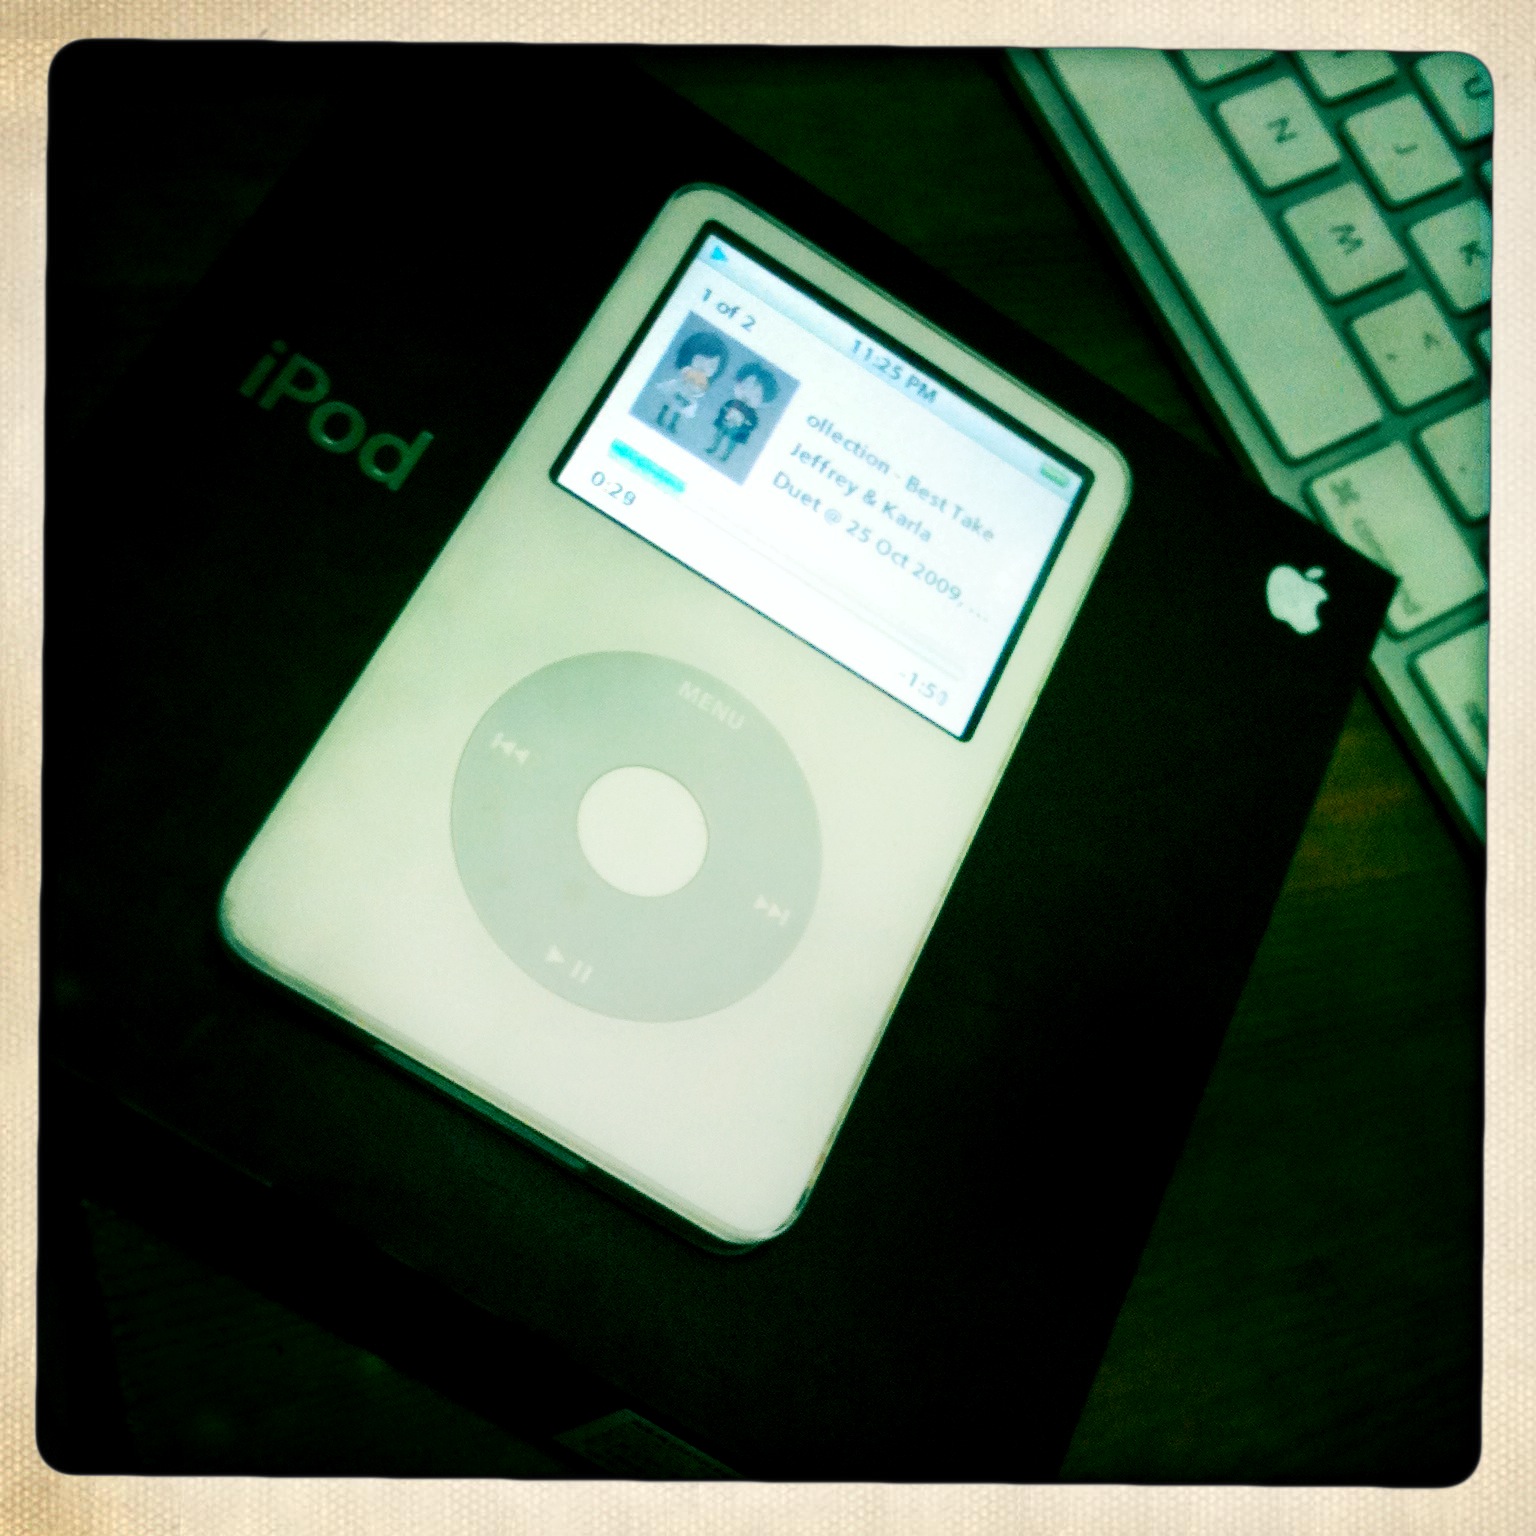 My iPod, heh